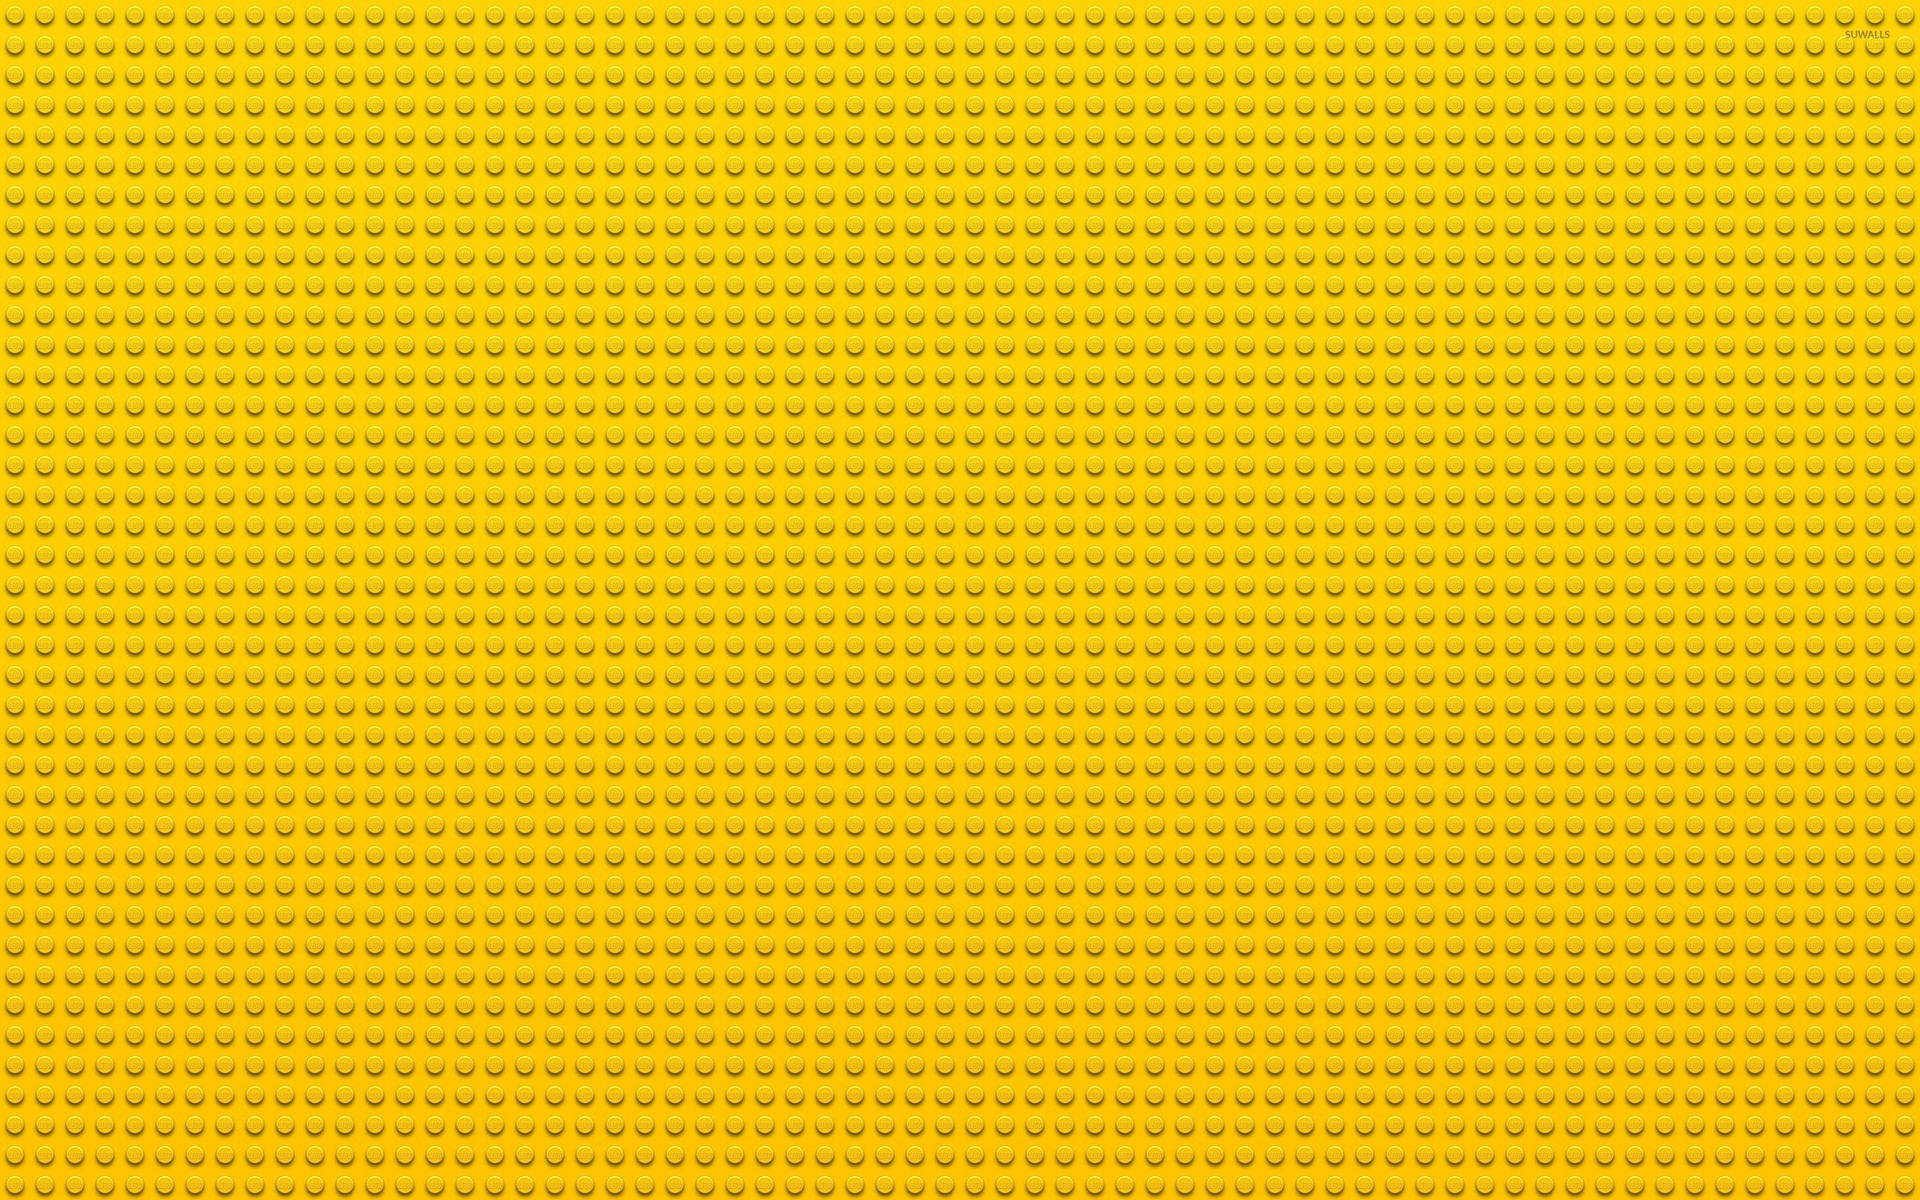 Yellow Lego Inspired Background